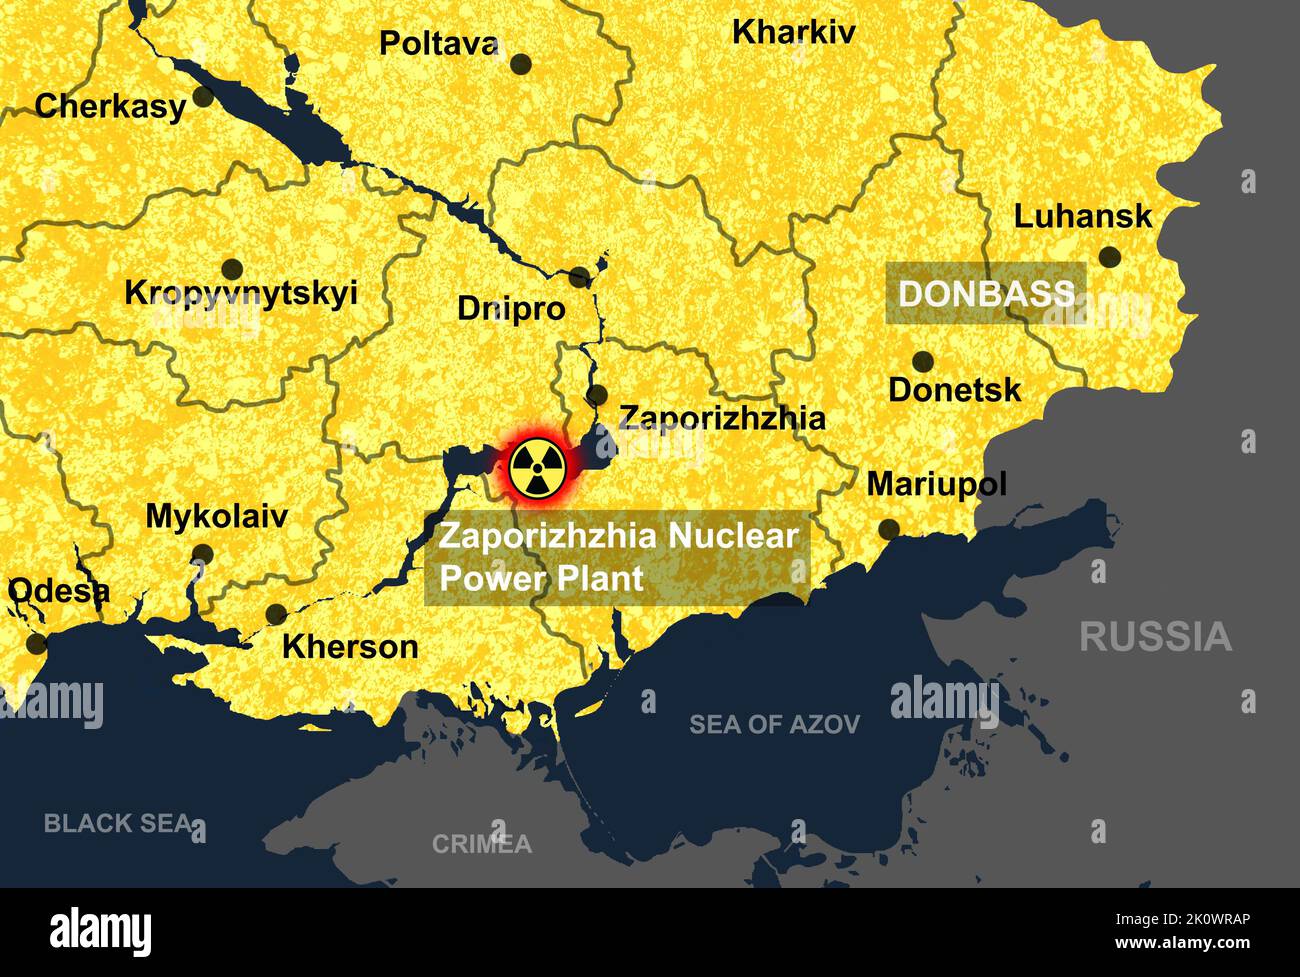 Zaporizhzhia Nuclear Power Plant in Ukraine map, dangerous spot. Russo-Ukrainian war. Kherson, Donetsk, Mykolaiv, Odesa, Luhansk and Kharkiv regions. Stock Photo